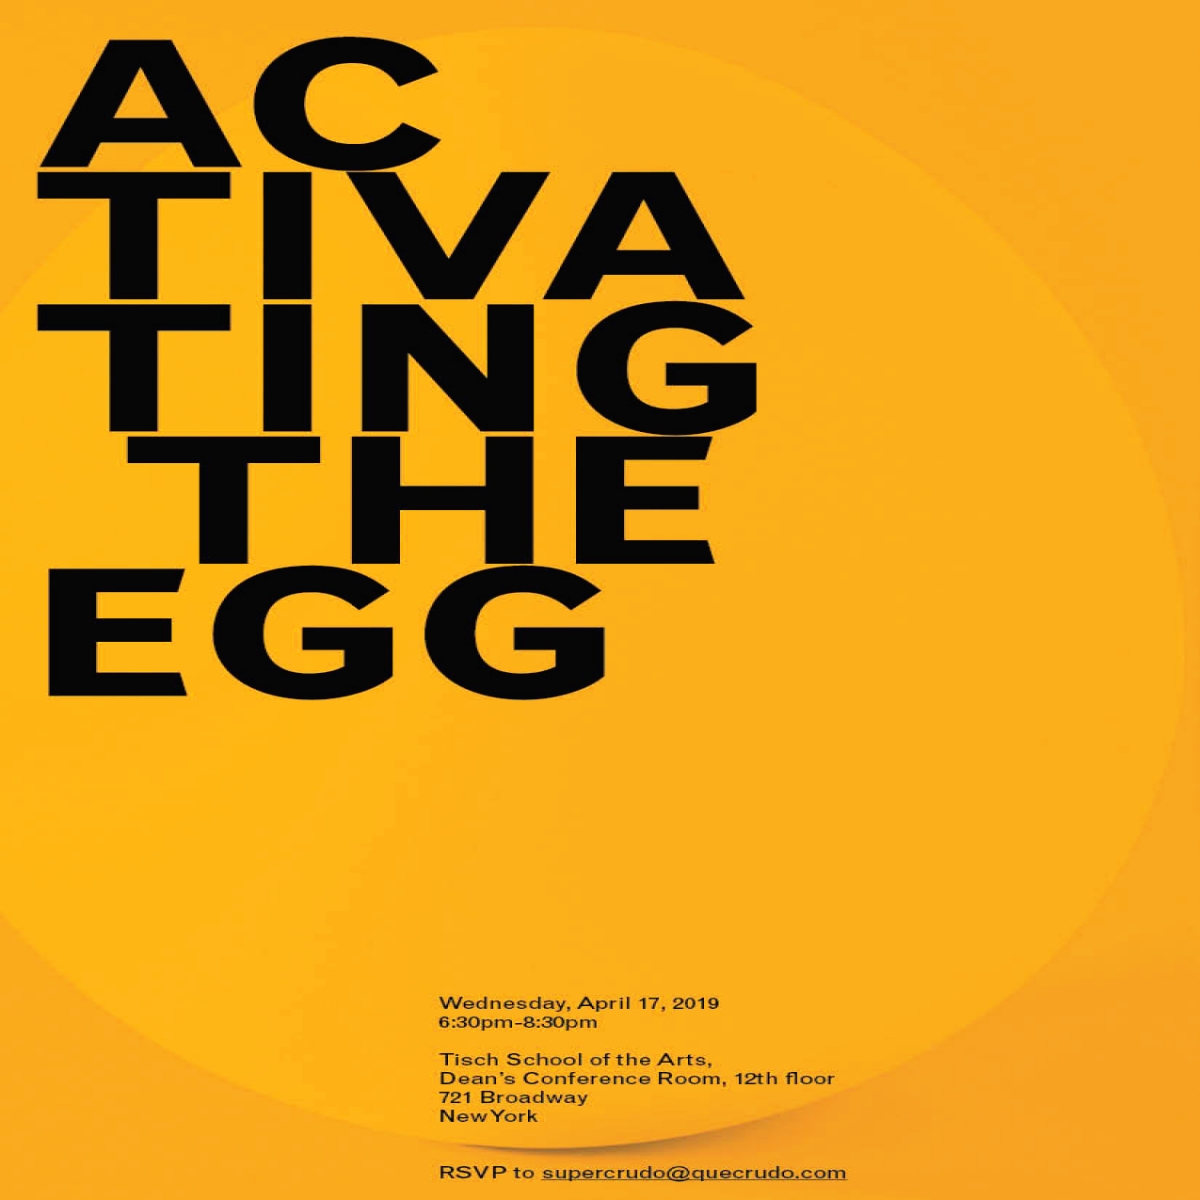 Orange event flyer with black text and light orange egg shape